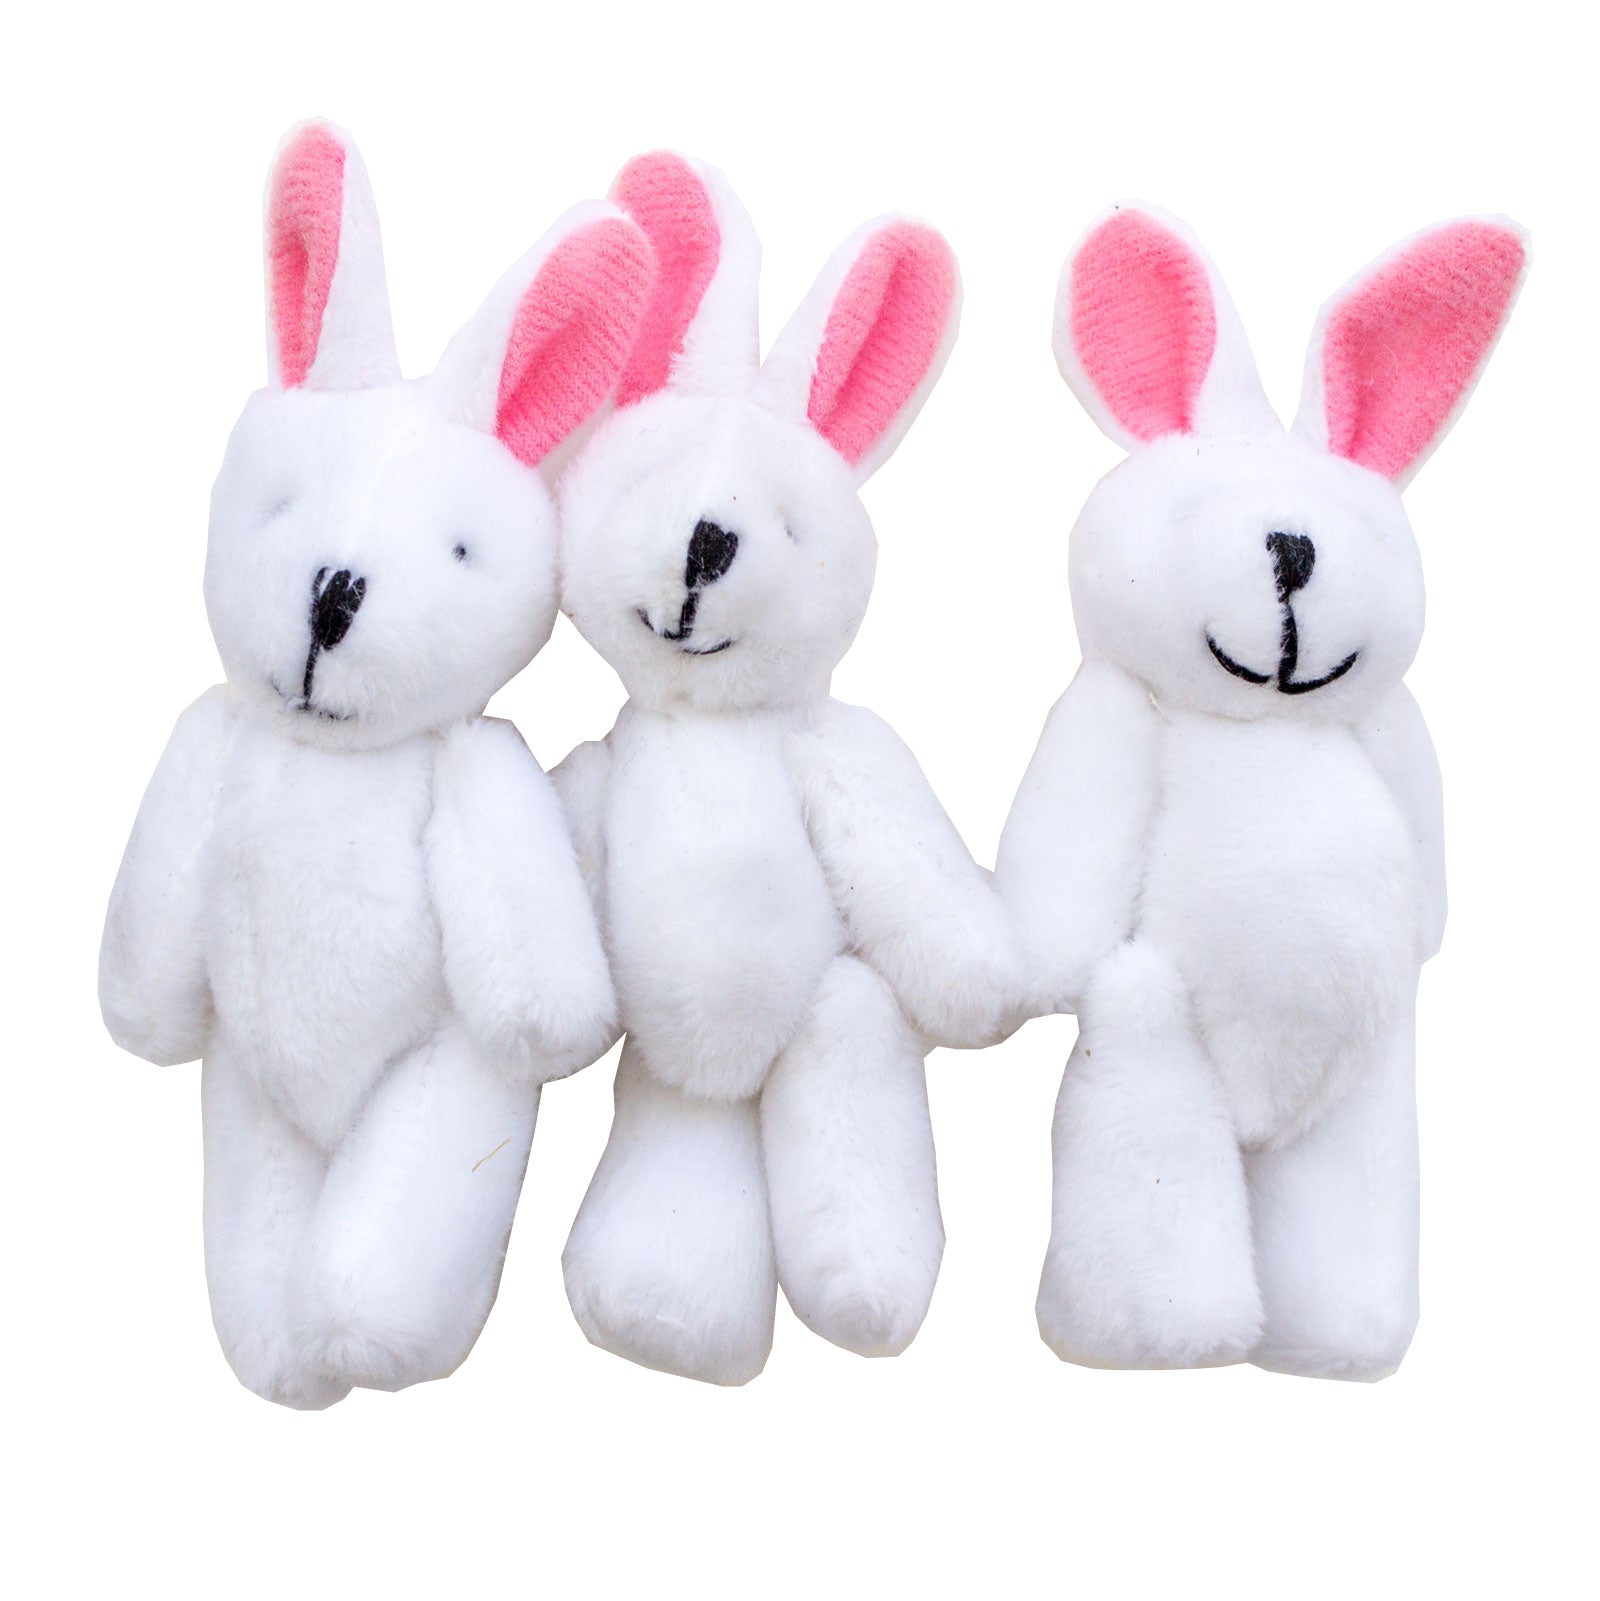 Small Rabbits X 55 - Cute Soft Adorable